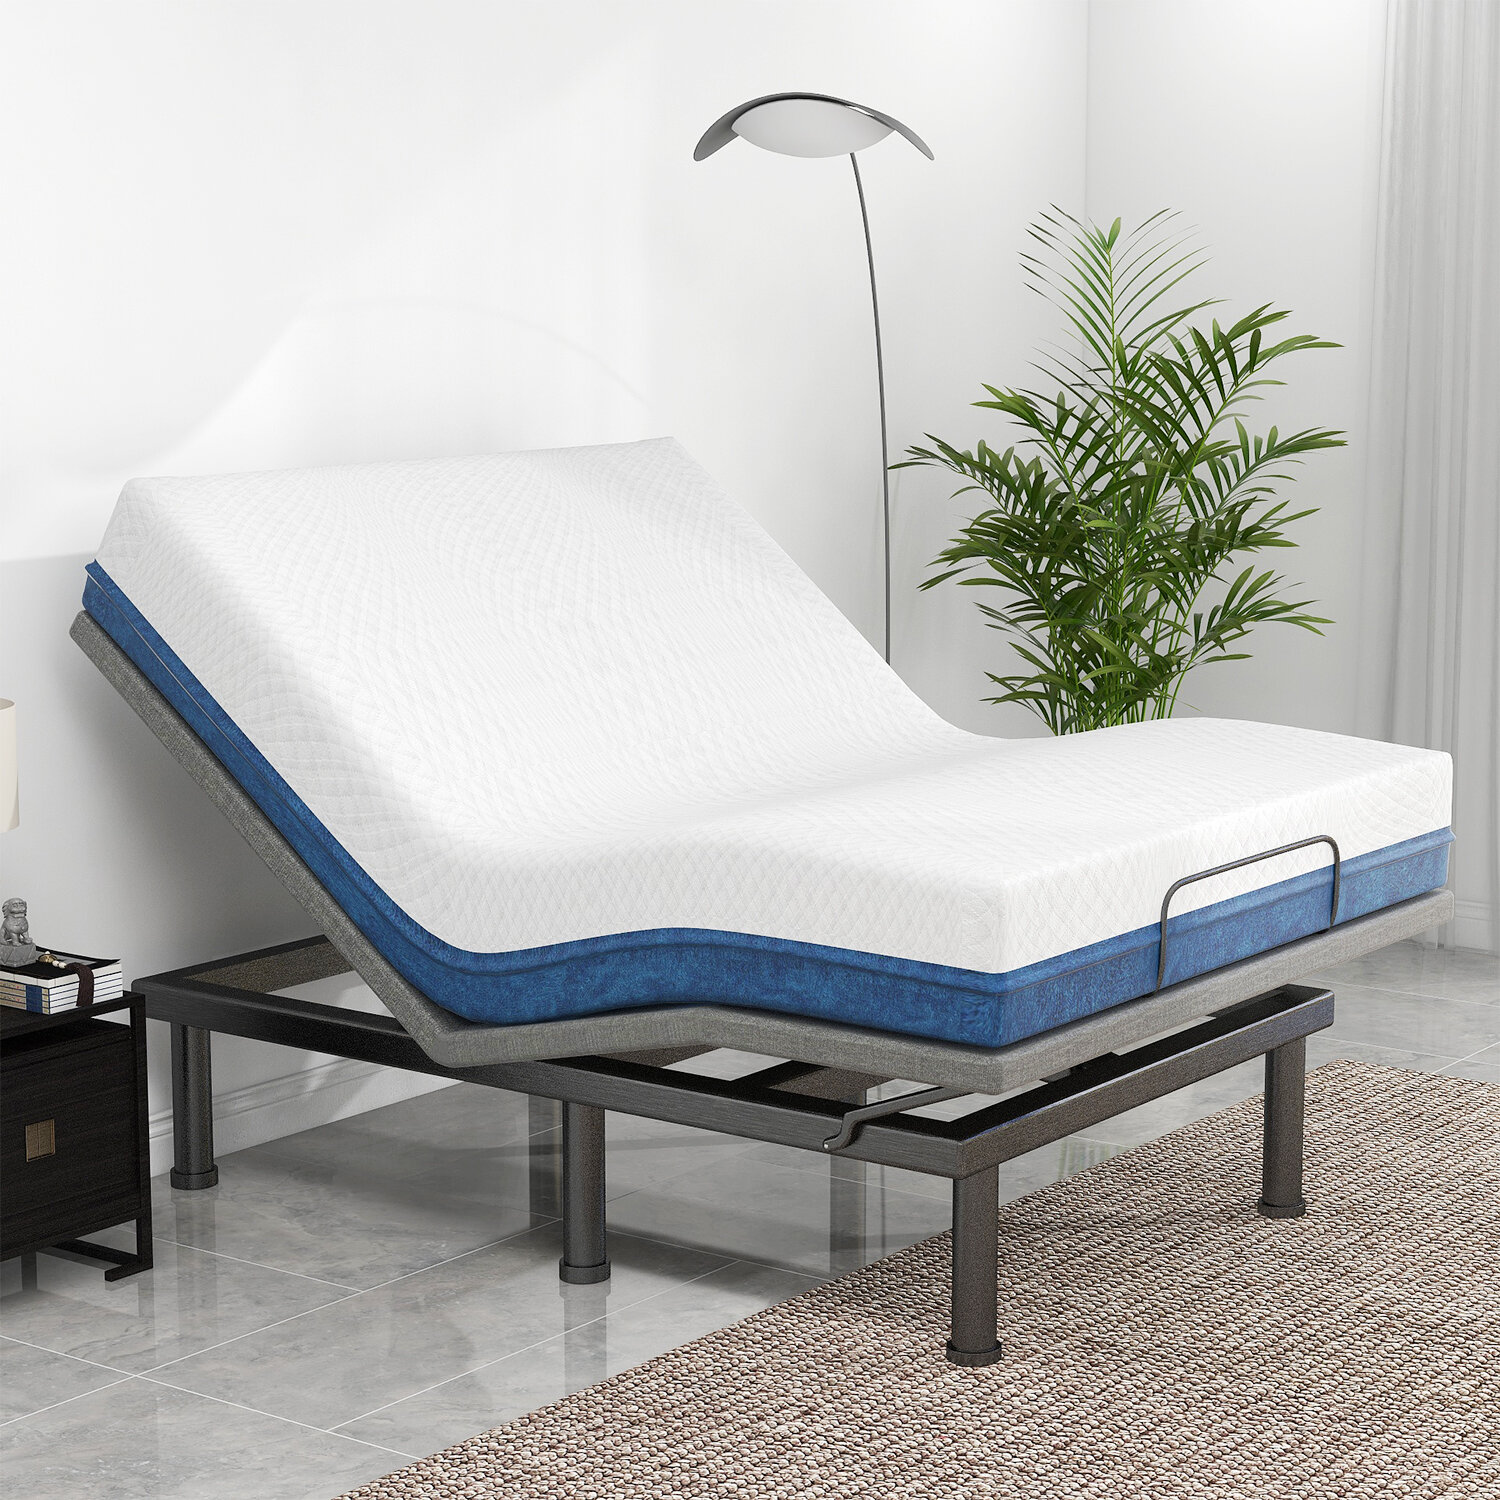 ESHINE EE-3000P Massaging Zero Gravity Adjustable Bed with